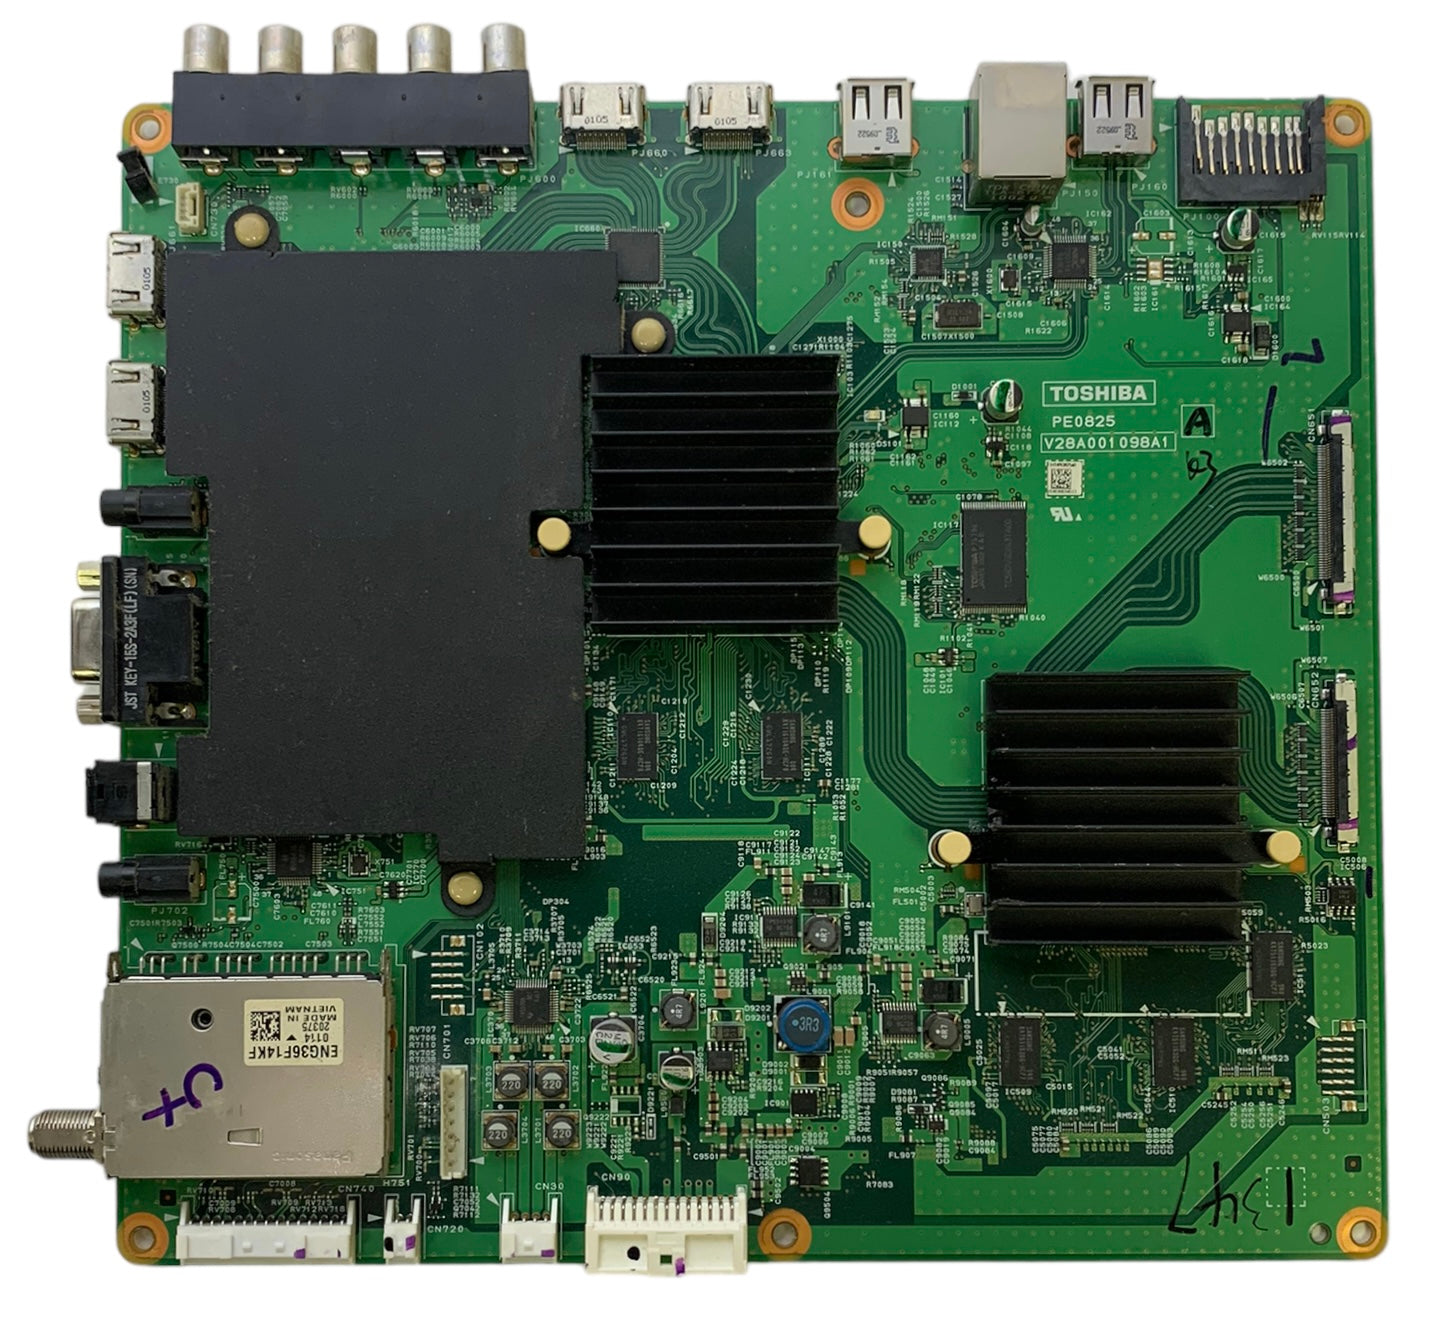 Toshiba 75017823 (PE0825A, V28A001098A1) Main Board